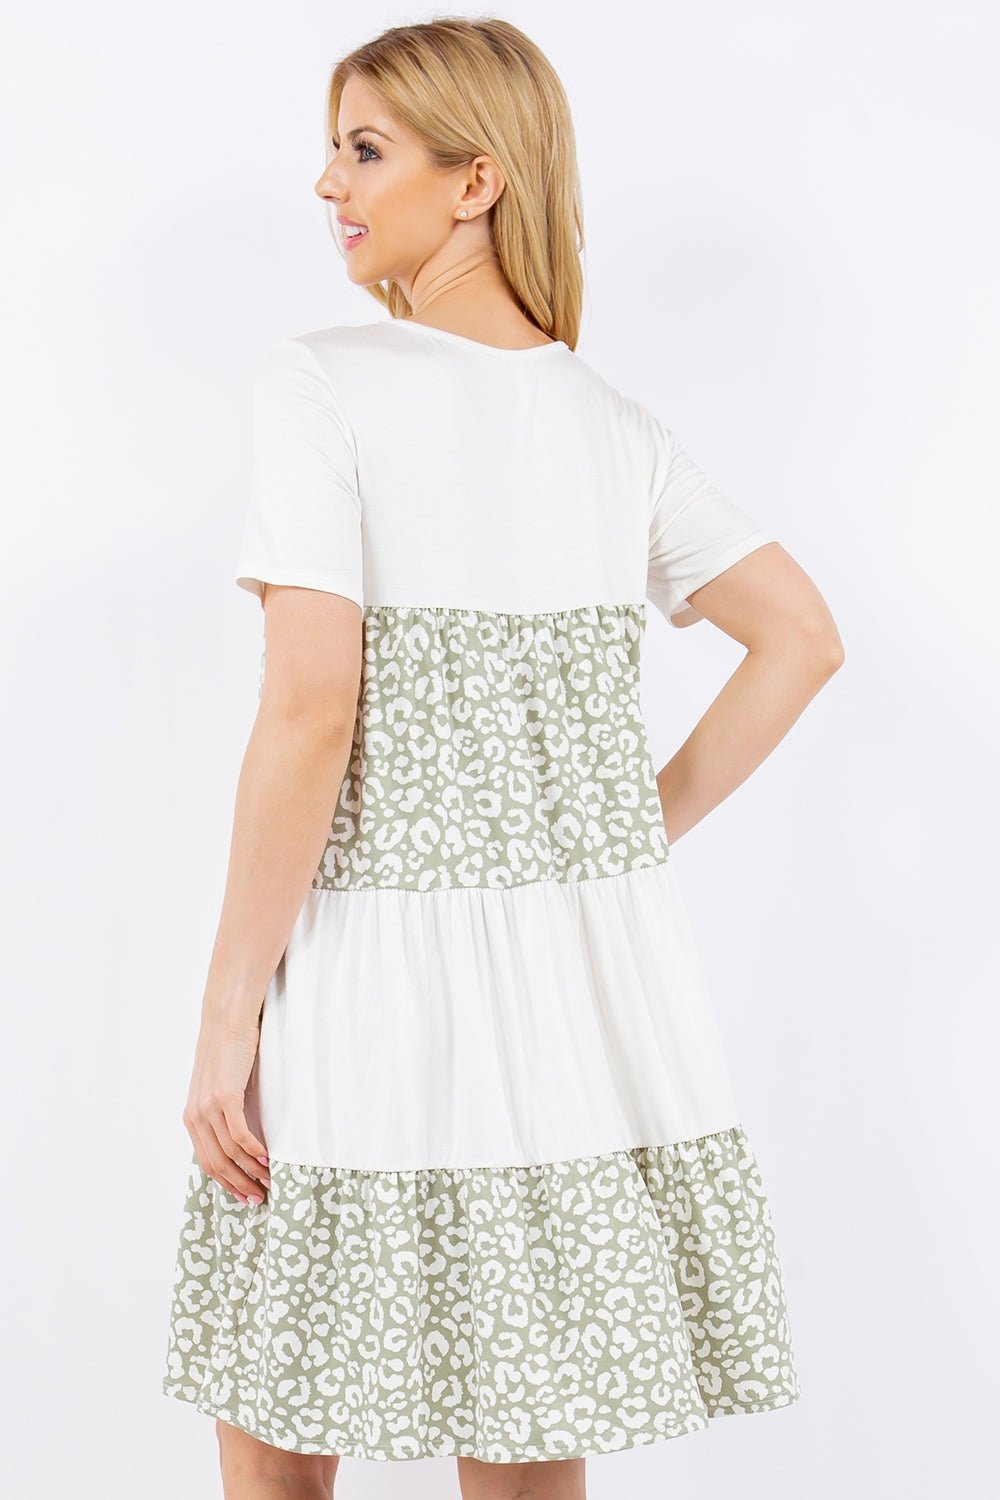 Leopard Print Crew Neck Short Sleeve Mini Dress in IvoryMini DressCeleste Design